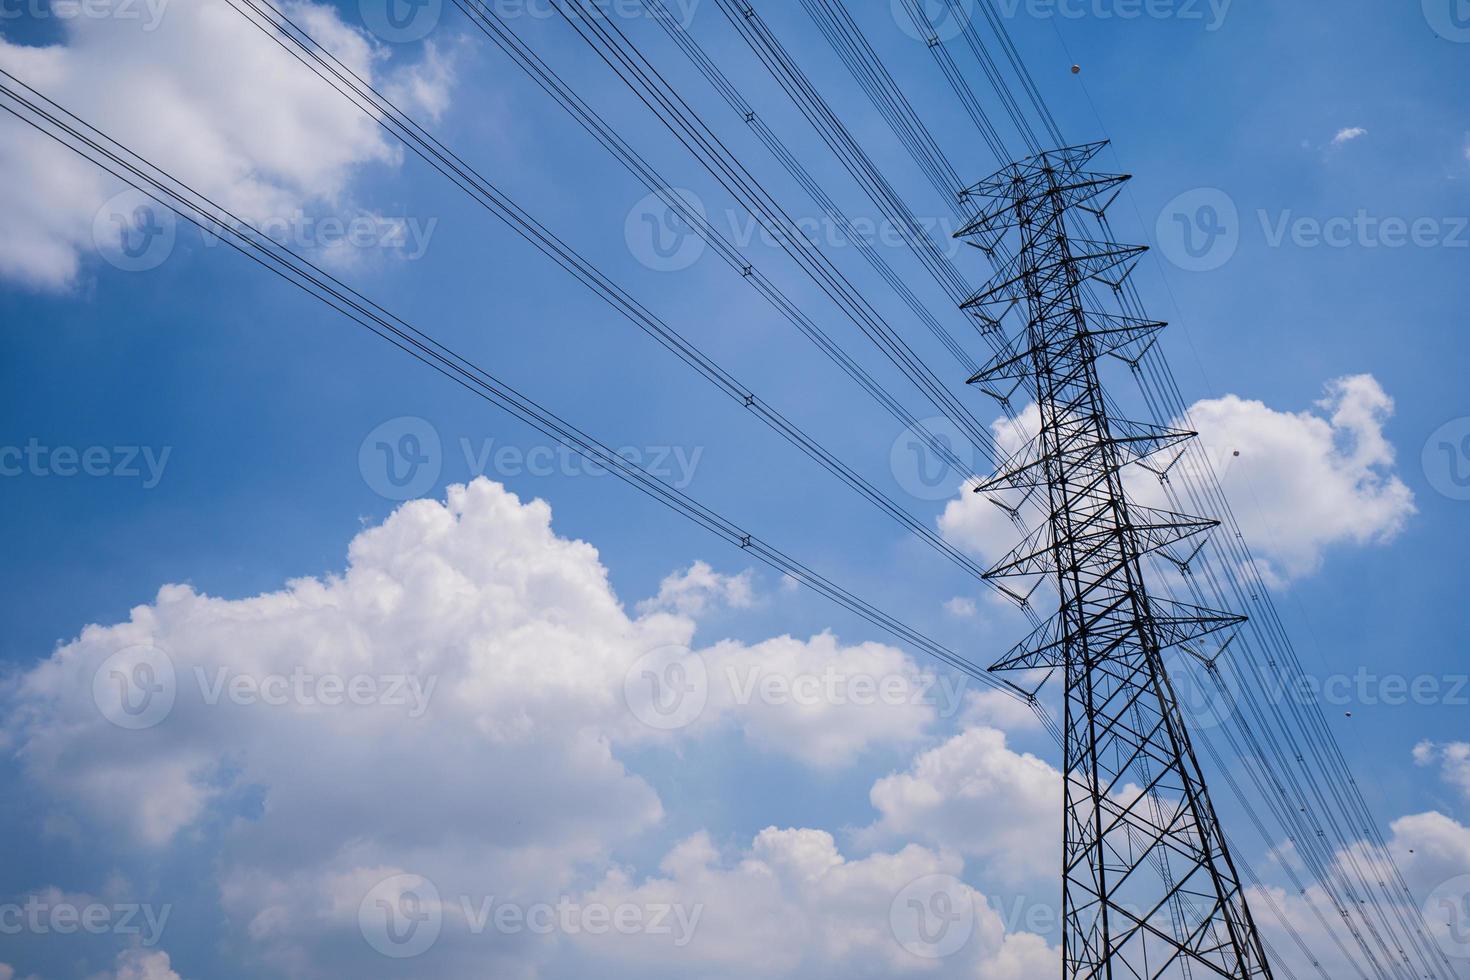 hoogspanning, elektriciteitstransmissie hoogspanningslijnen onder de blauwe lucht foto